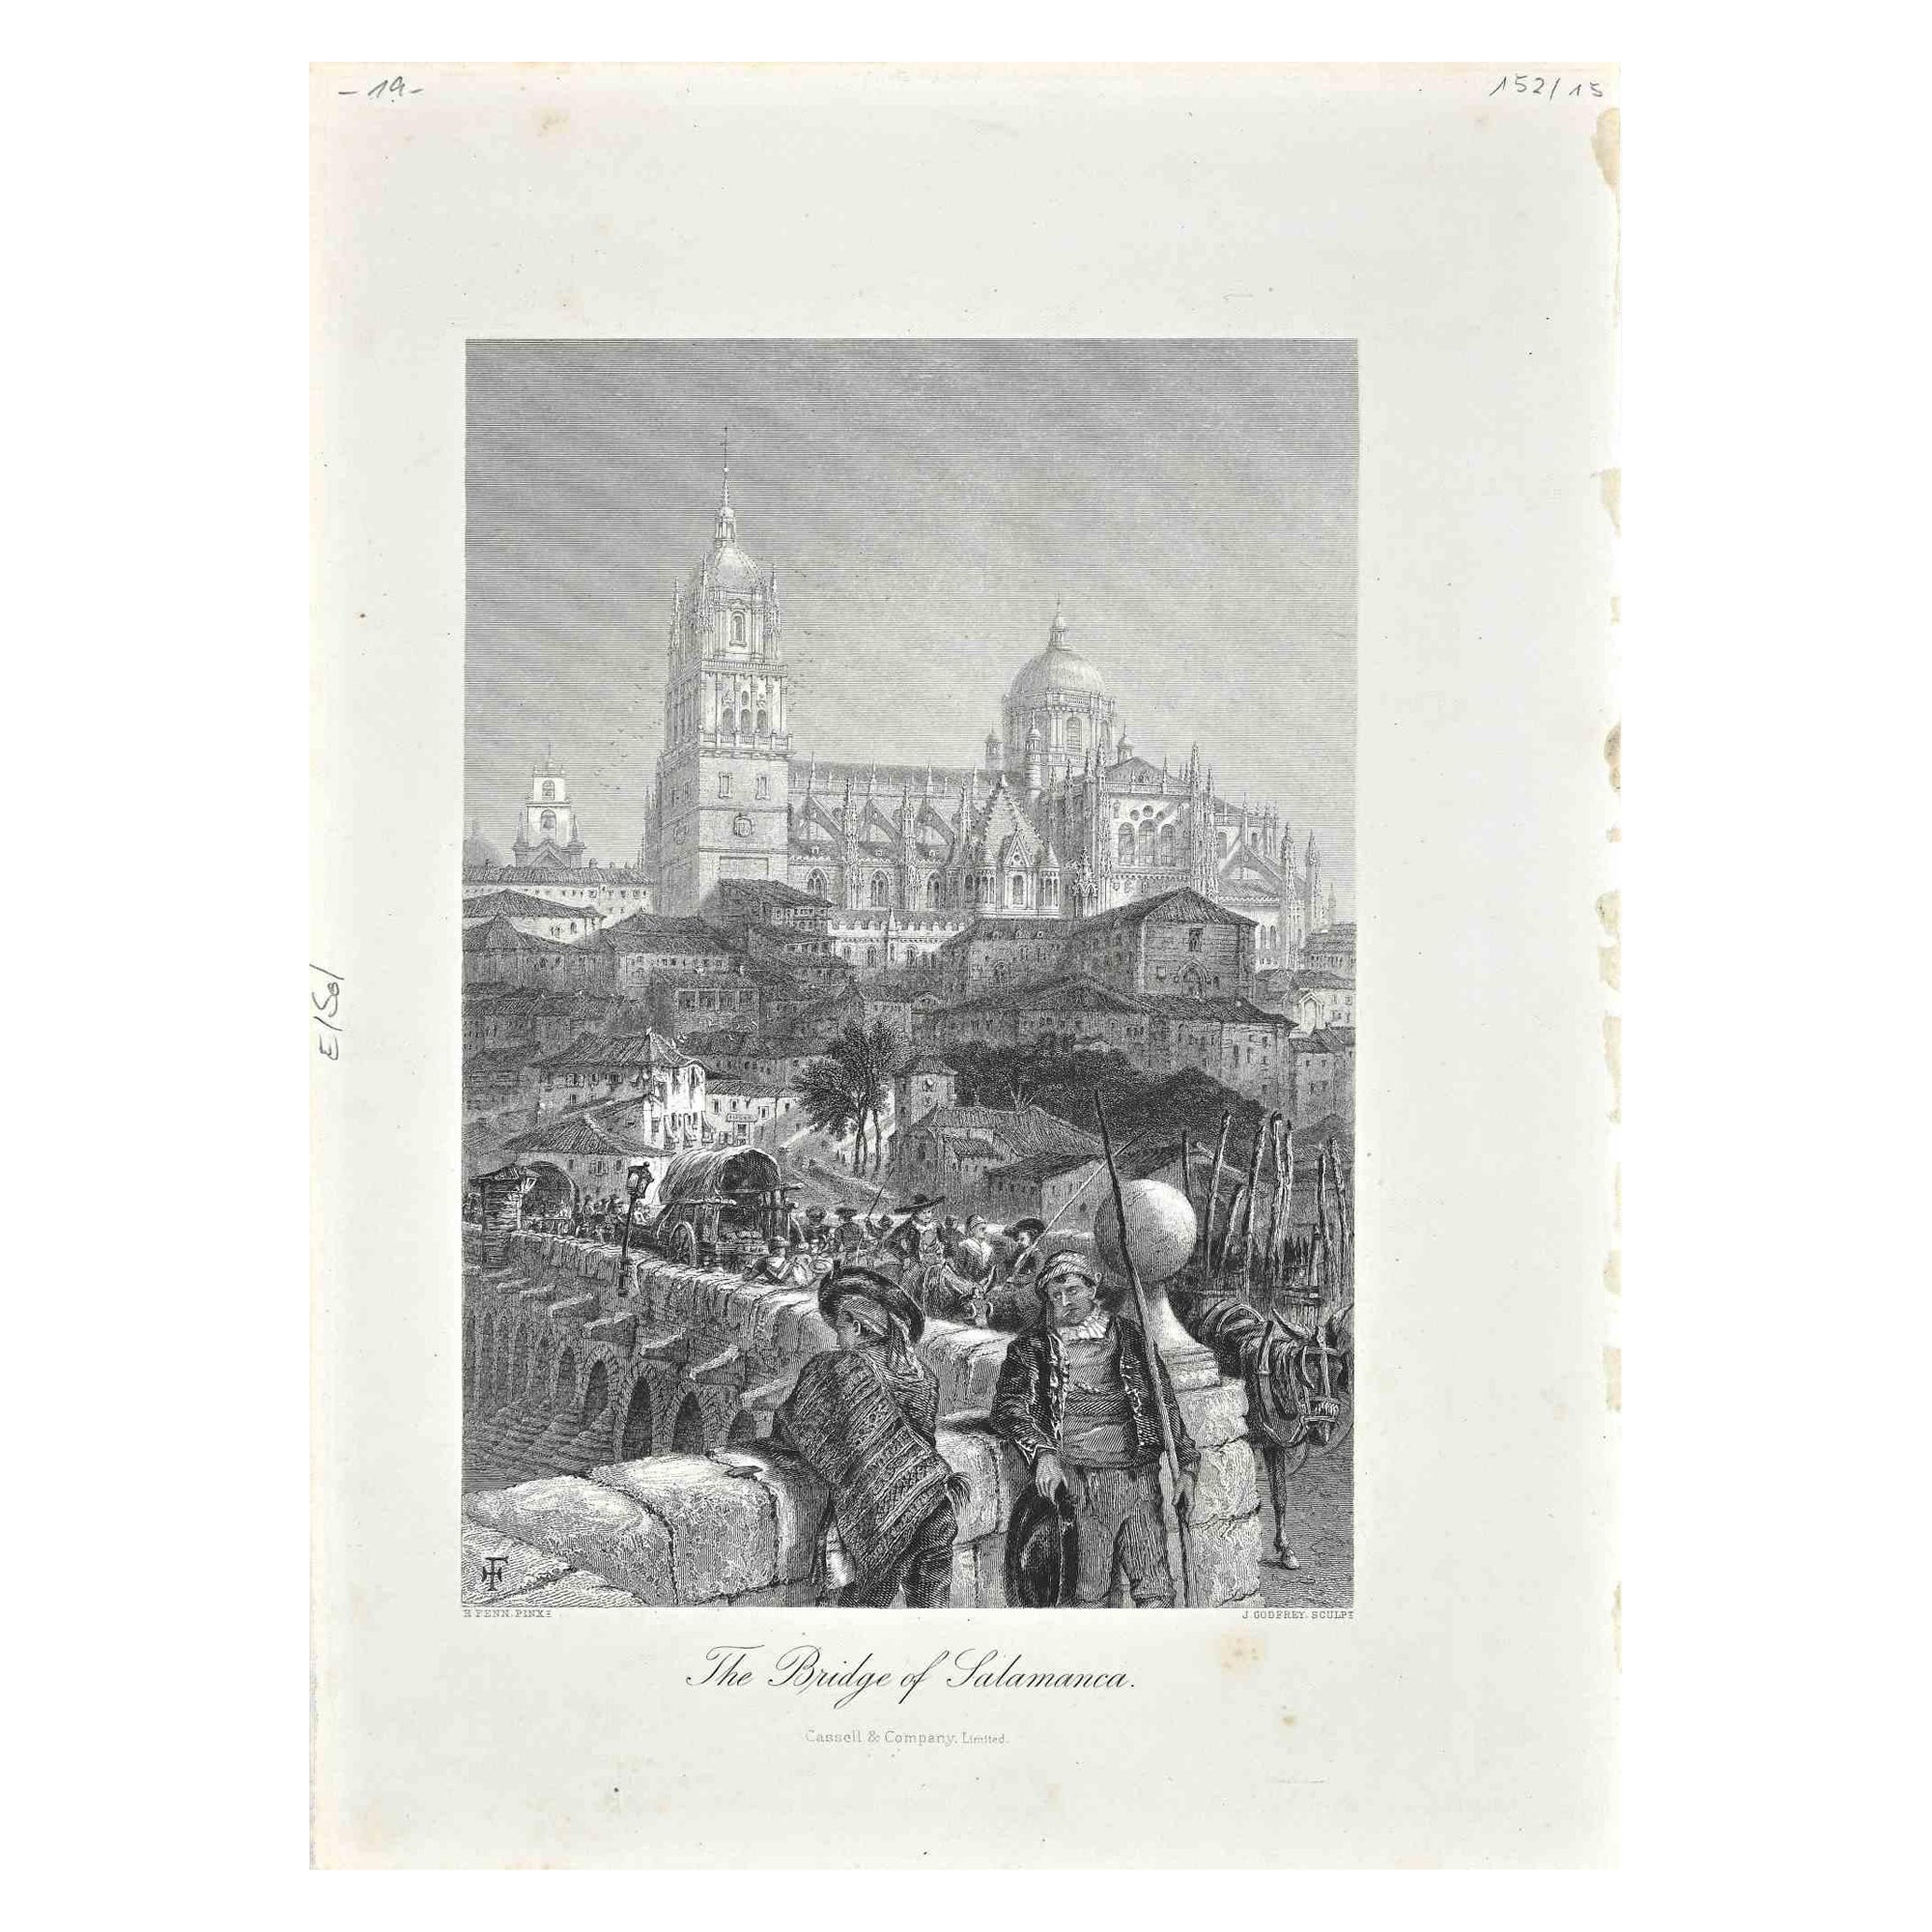 John Godfrey Landscape Print - The Bridge of Salamanca - Original Lithograph by J. Godfrey - 19th Century